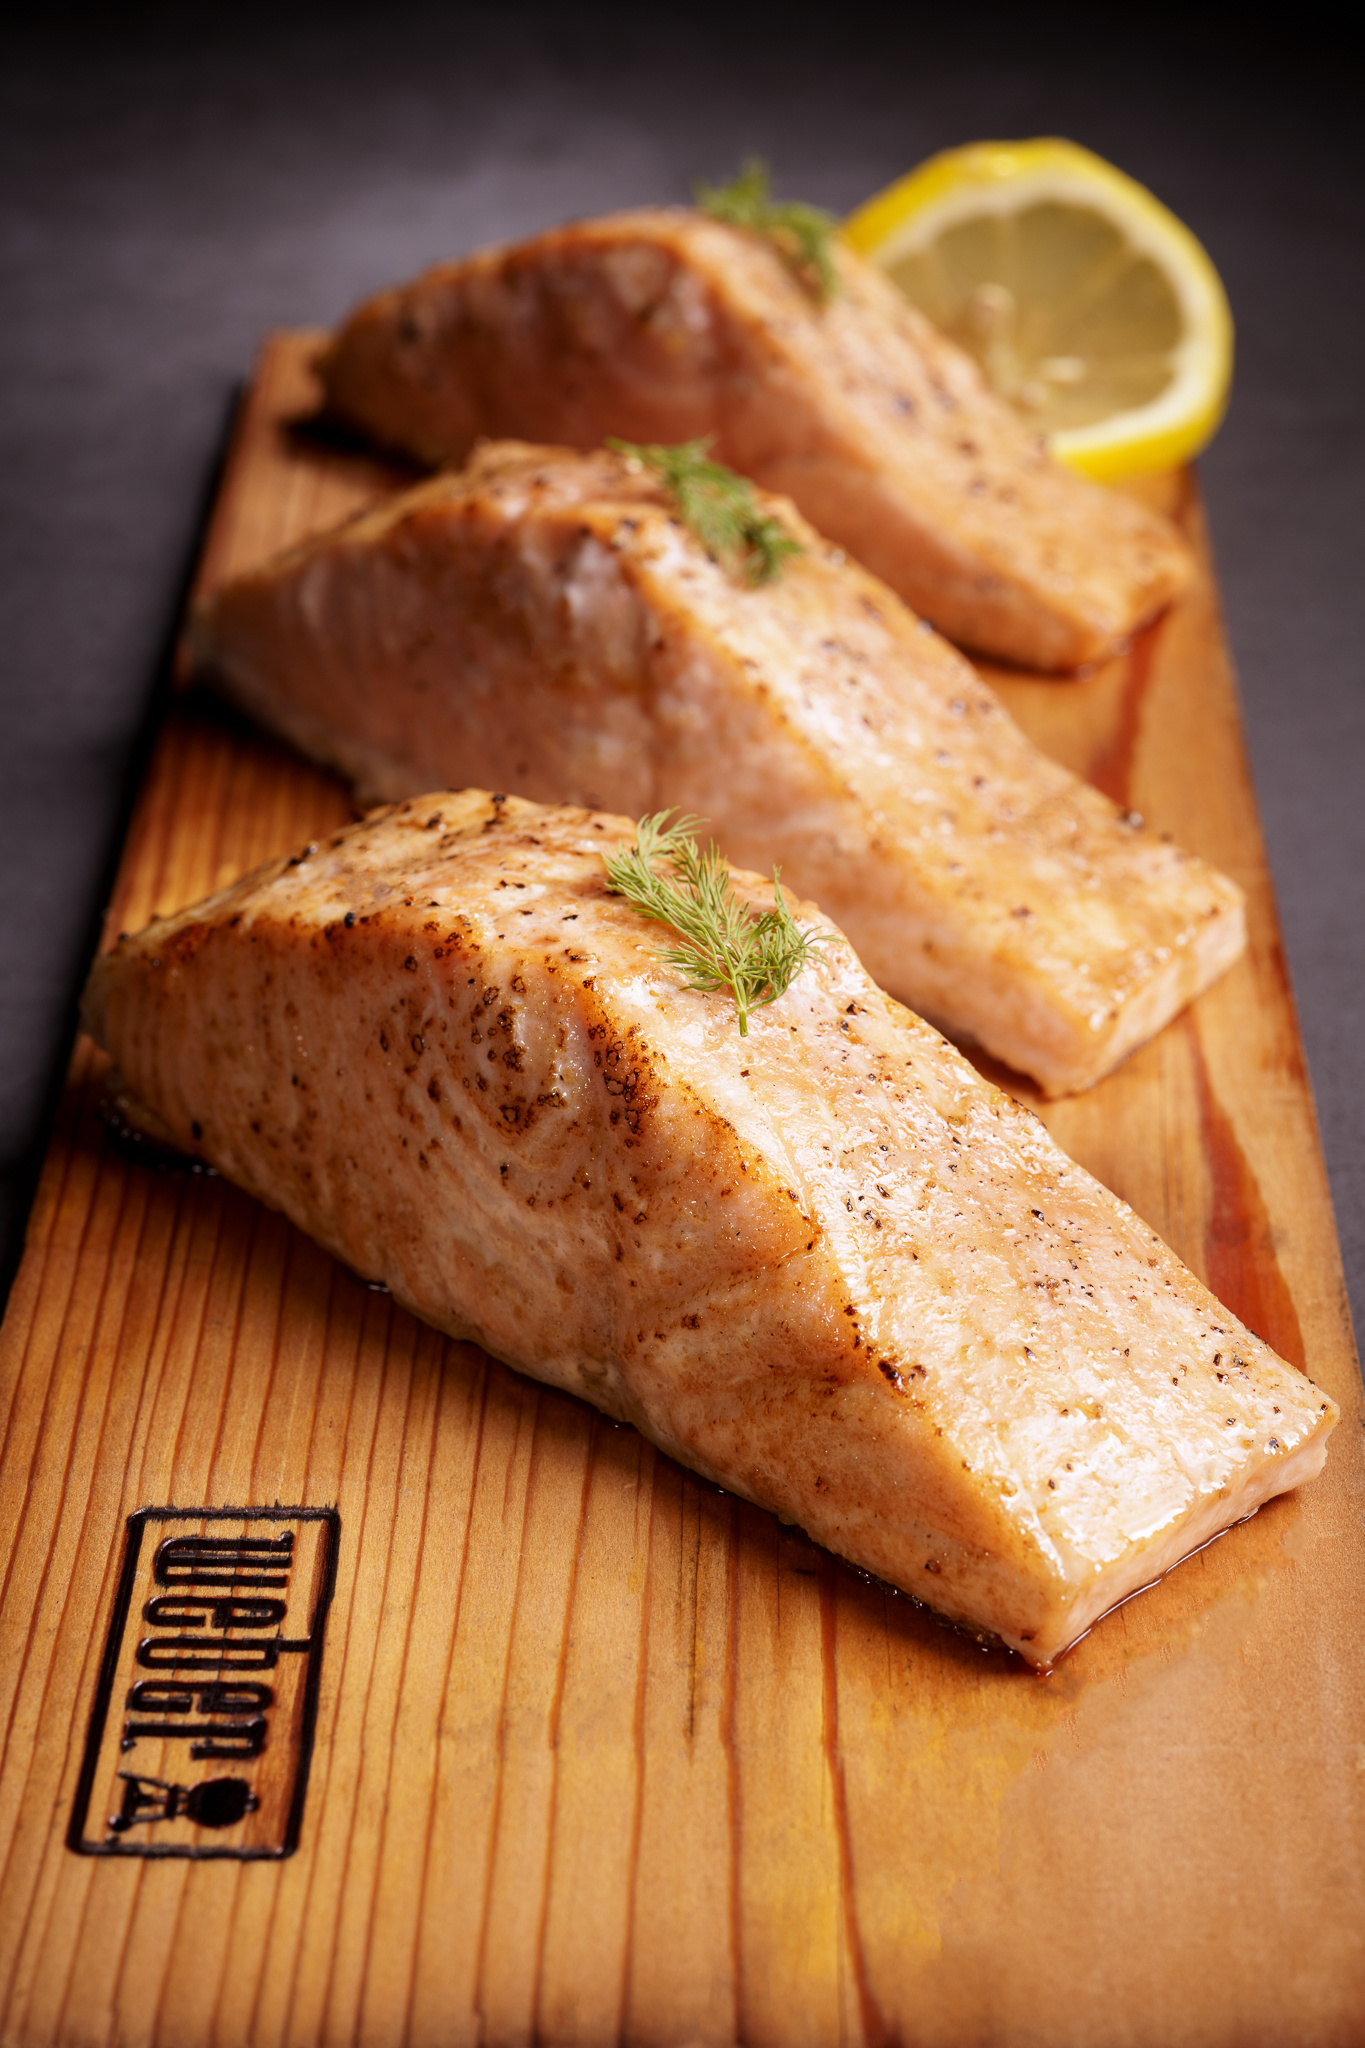  Cedar Plank King Salmon Filet
 
